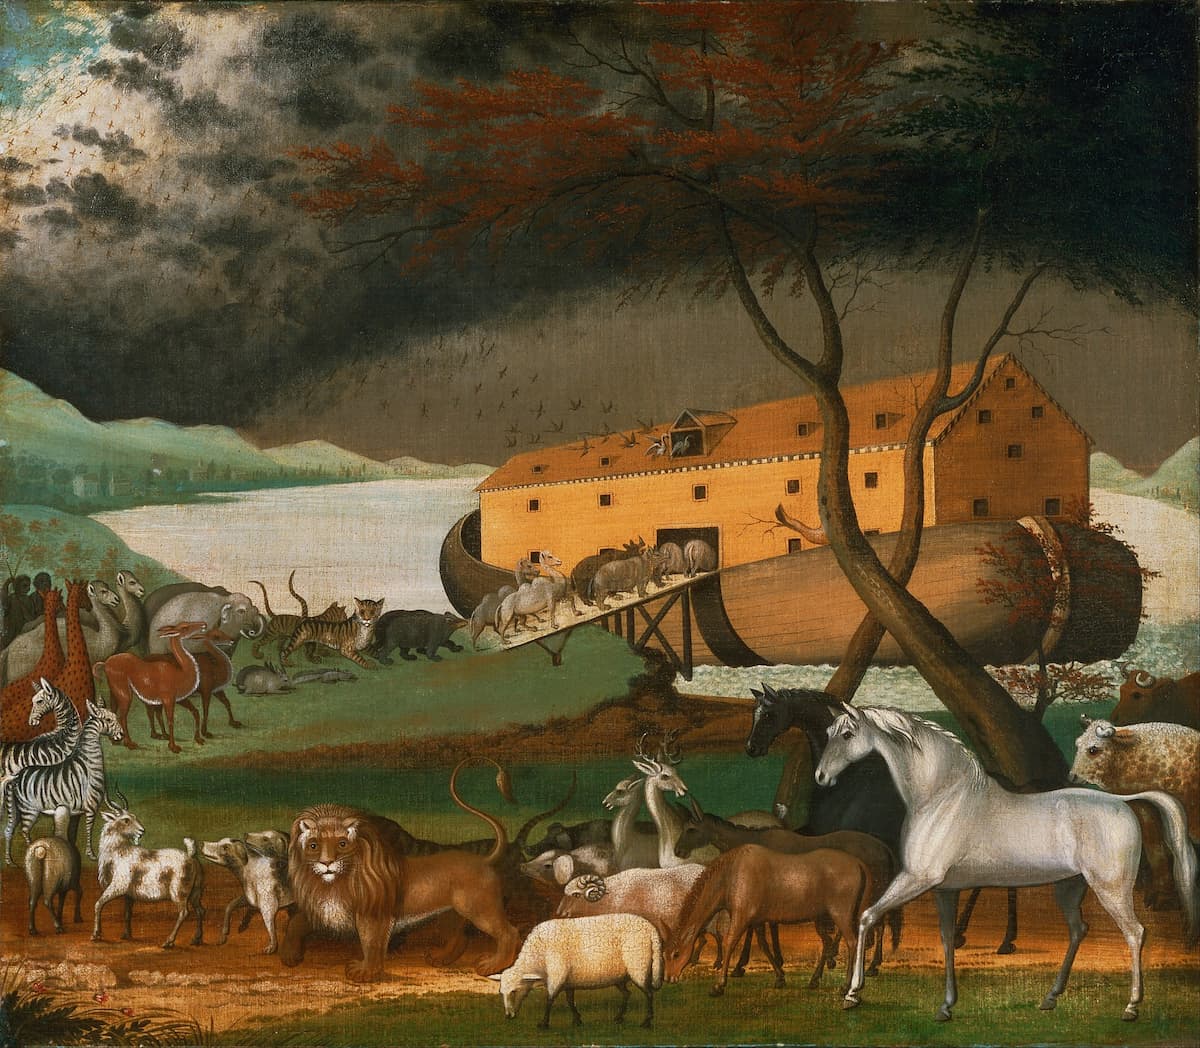 Noah's Ark (1846), by the American folk painter Edward Hicks